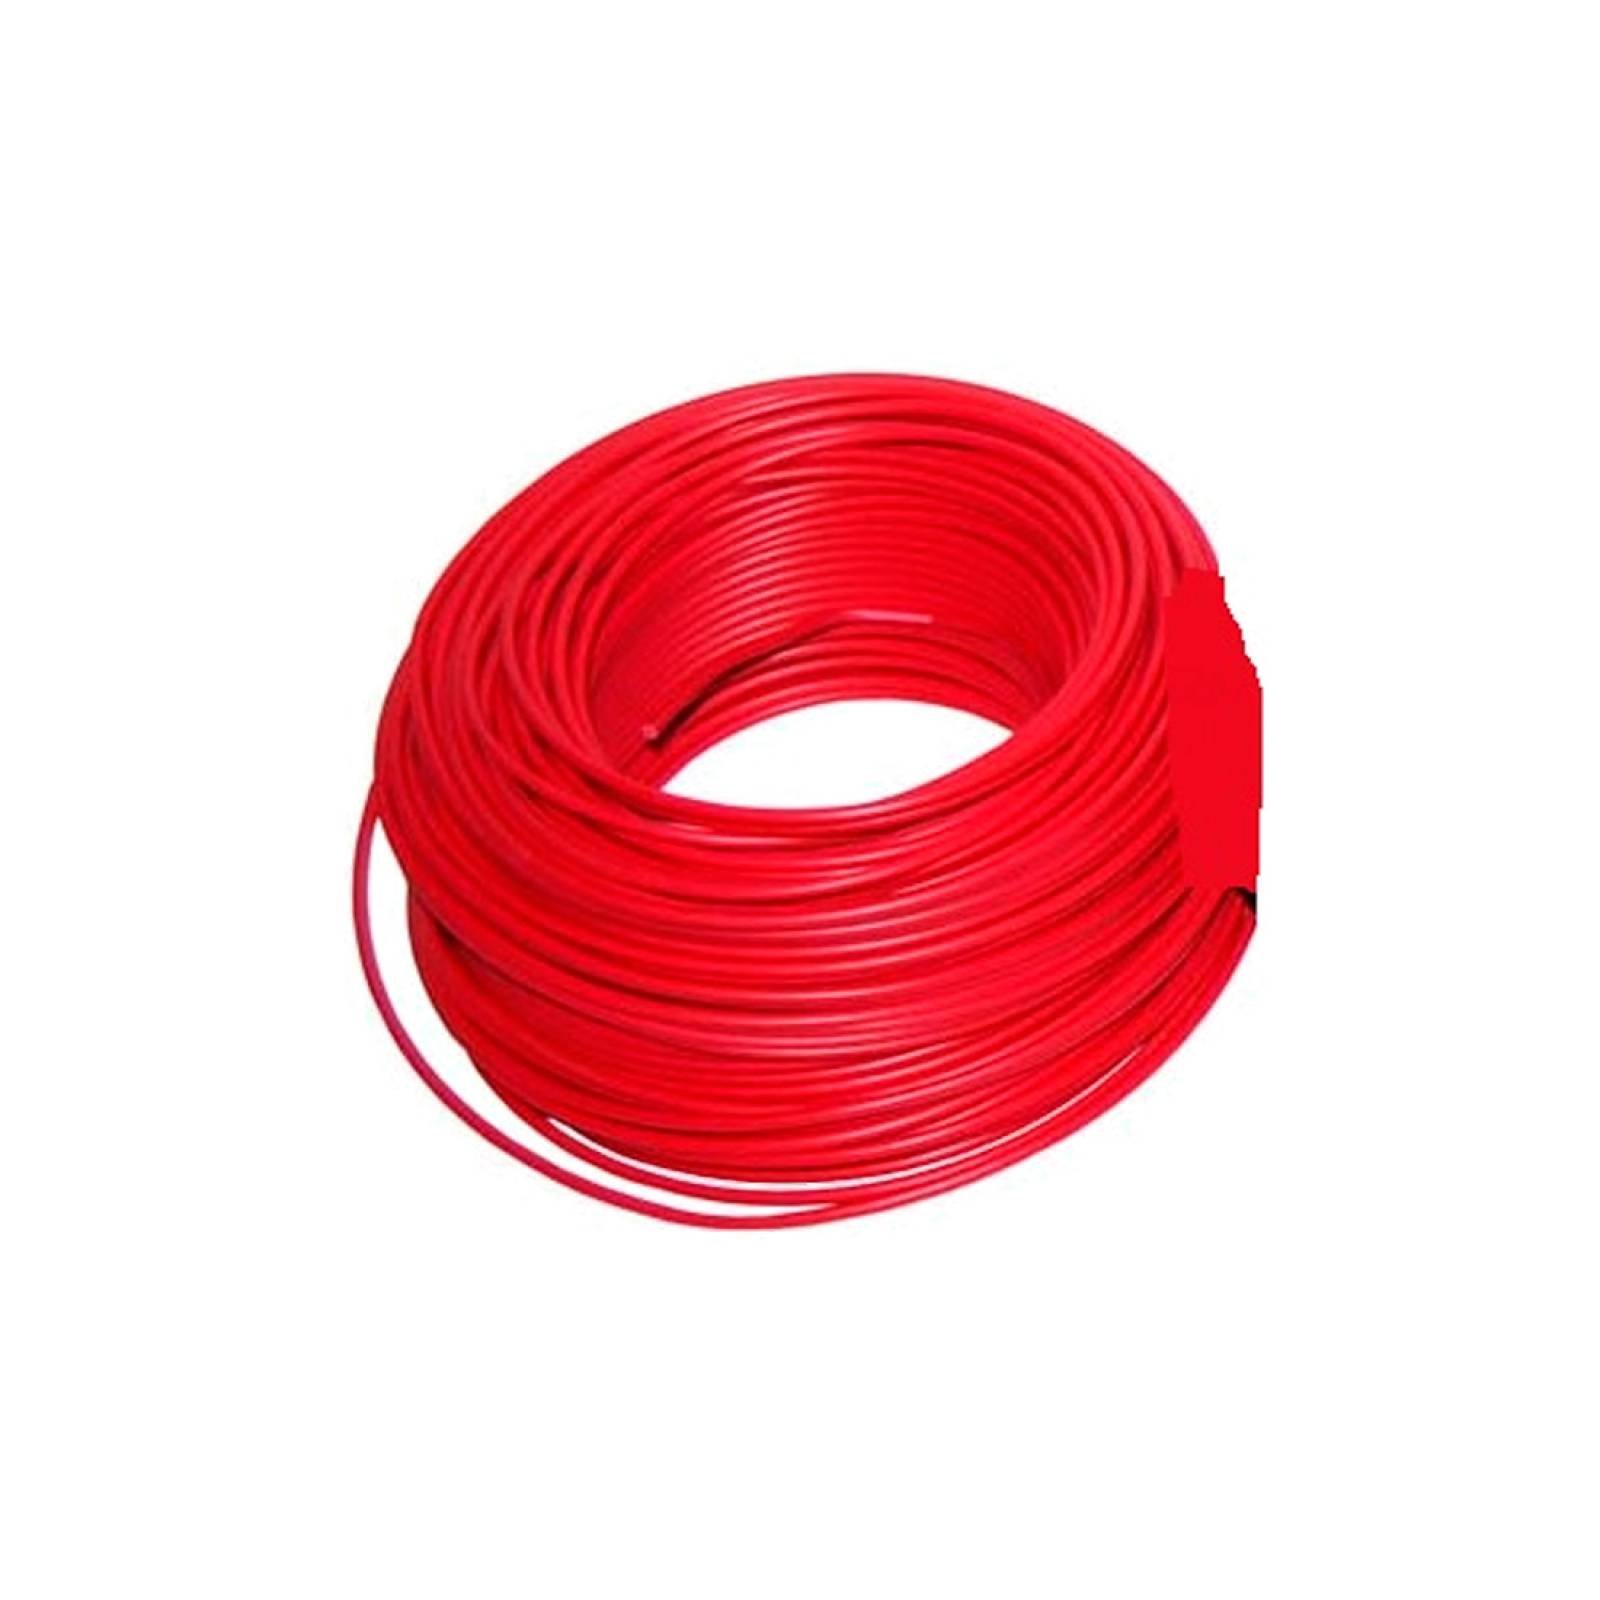 Cable Unipolar CU08R Calibre 8 Color Rojo 100 Mts MUNICH